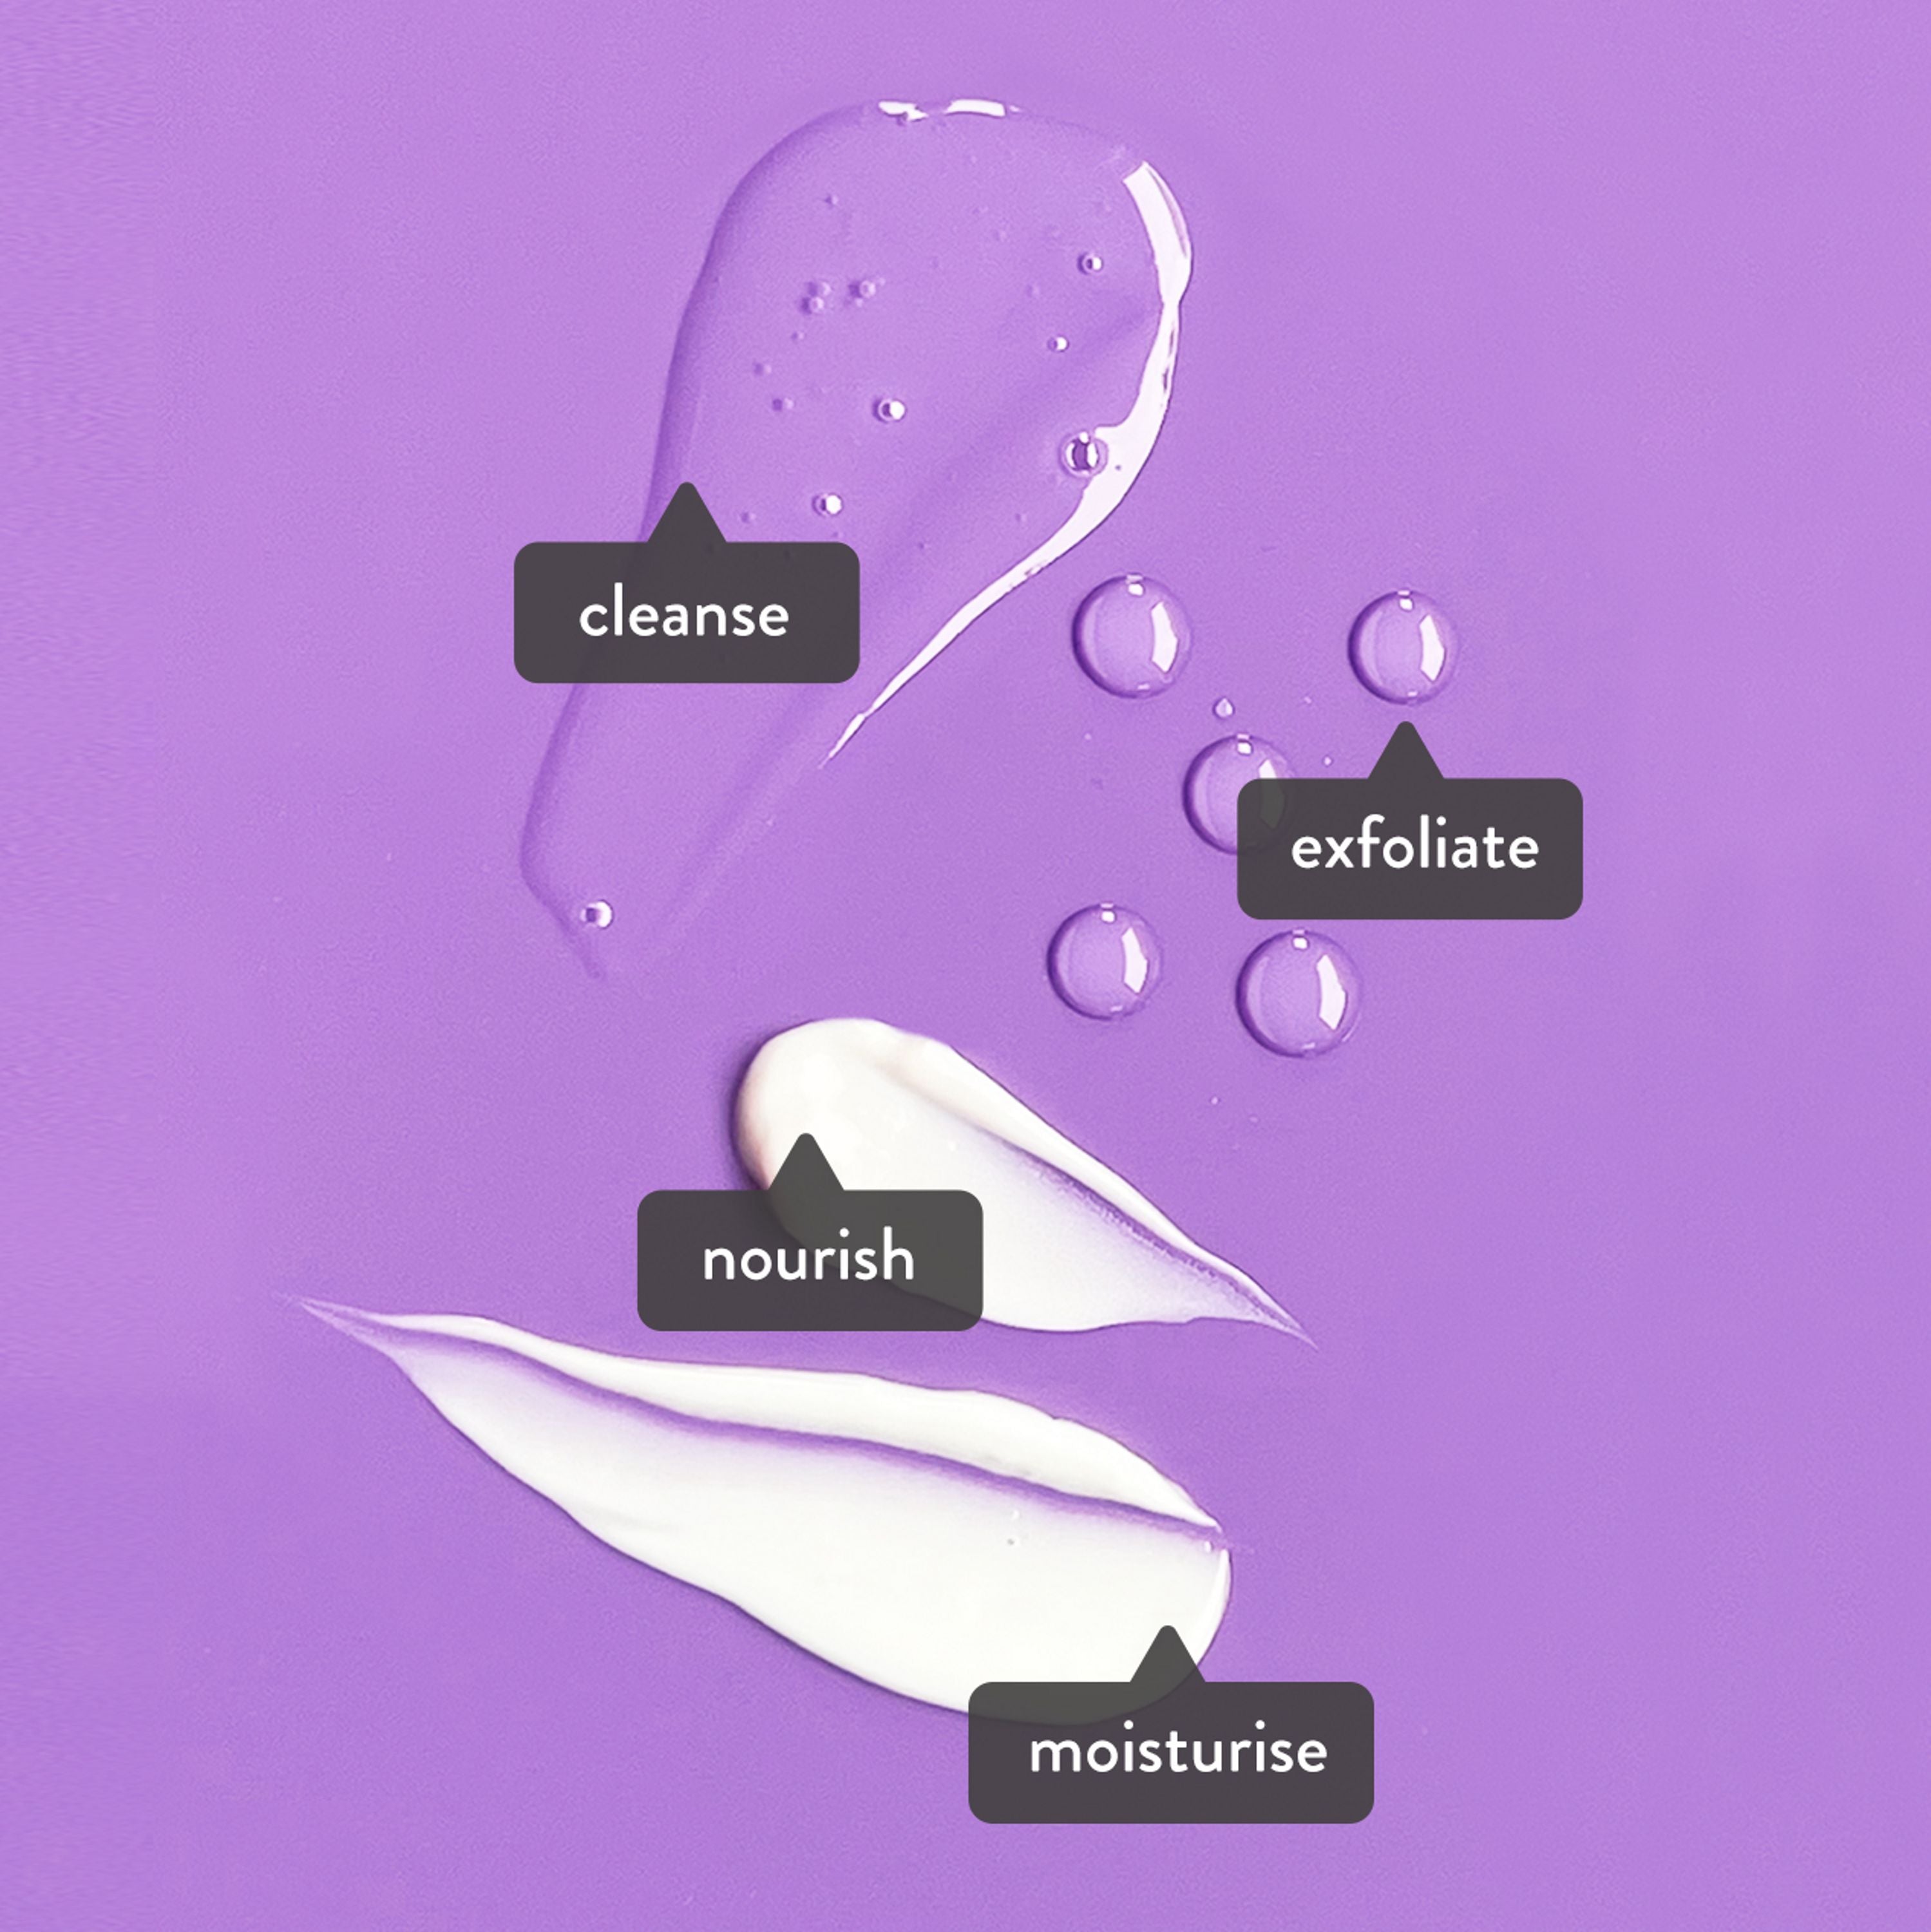 English: Cleanse, exfoliate, nourish, moisturise. Français: Nettoyer, exfolier, nourrir, hydrater.